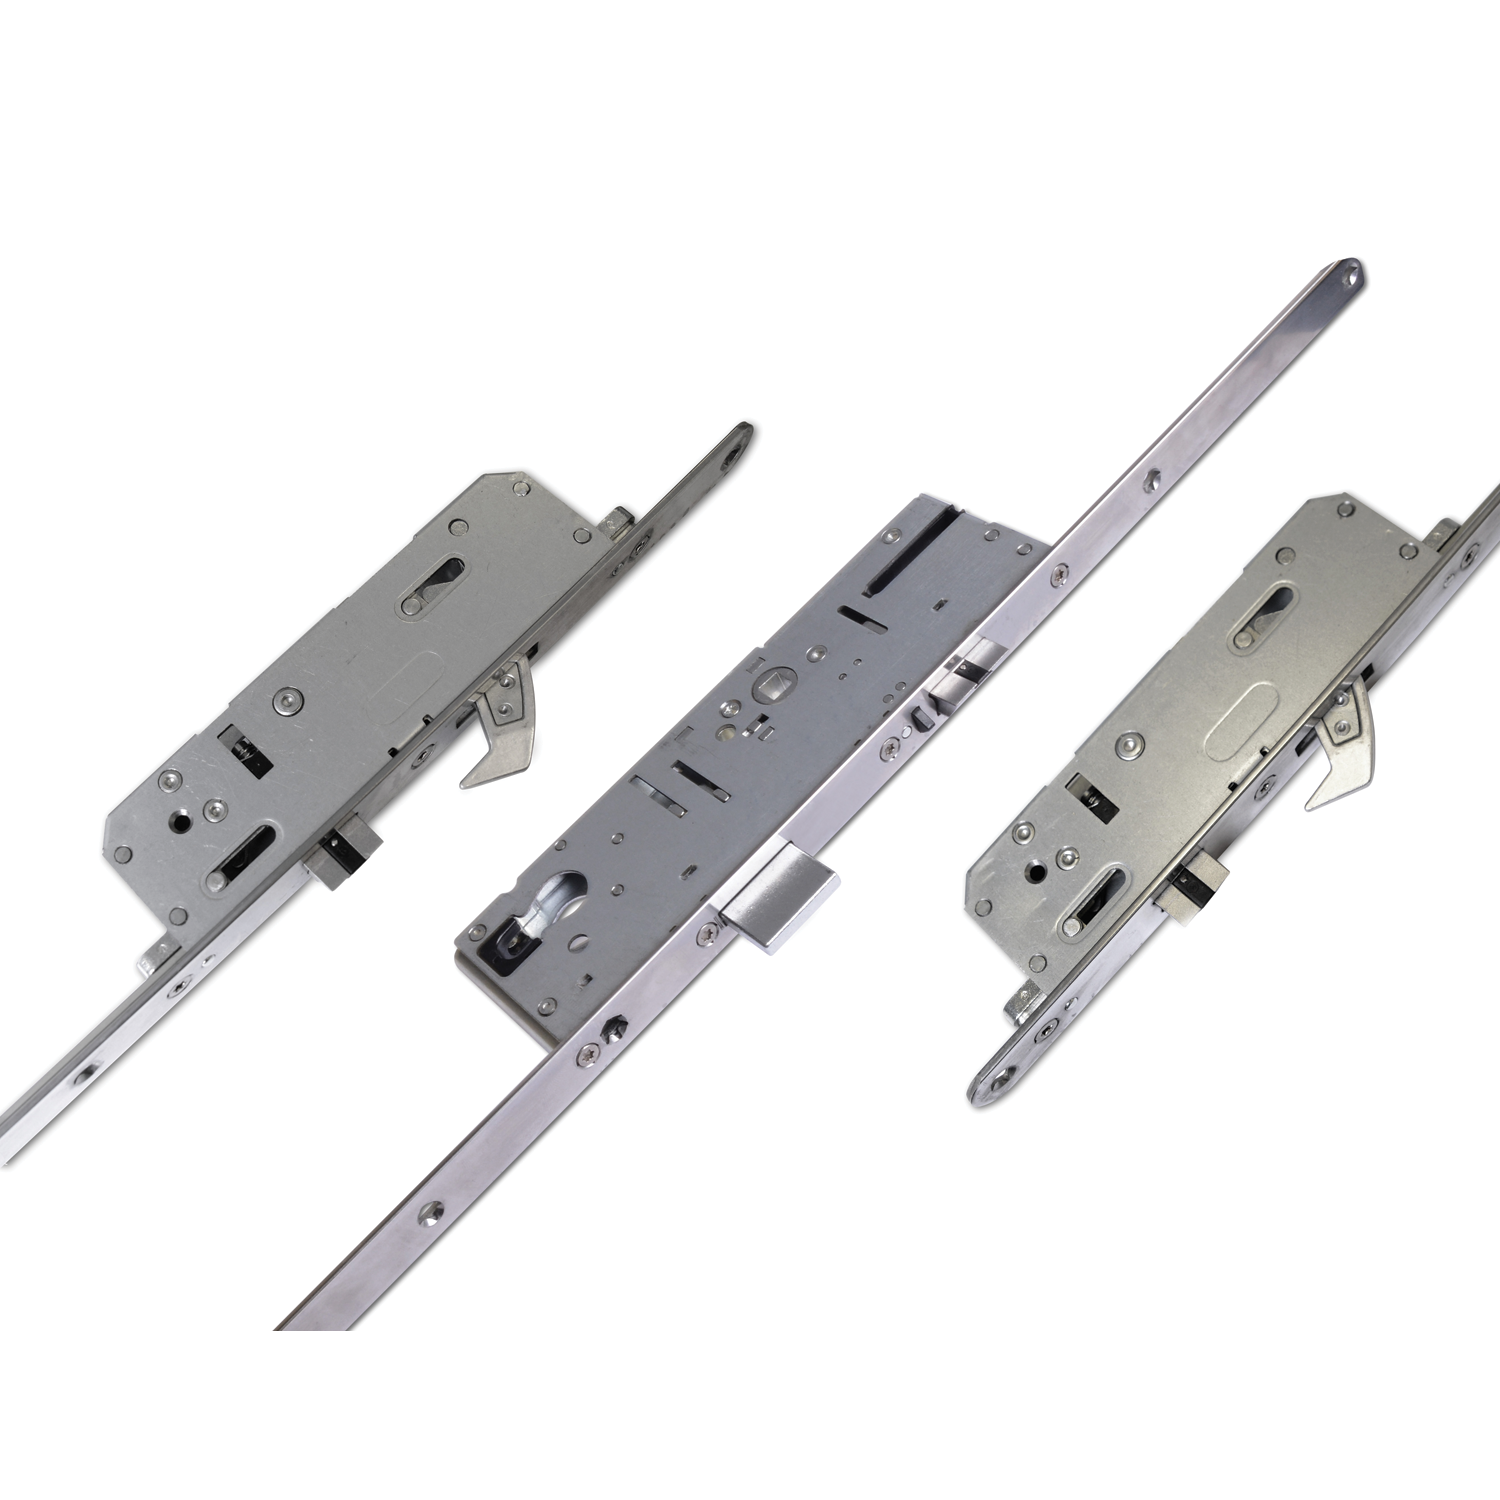 SureFire Classic 2 Hook Multi-Point Lock for Composite/Timber Doors